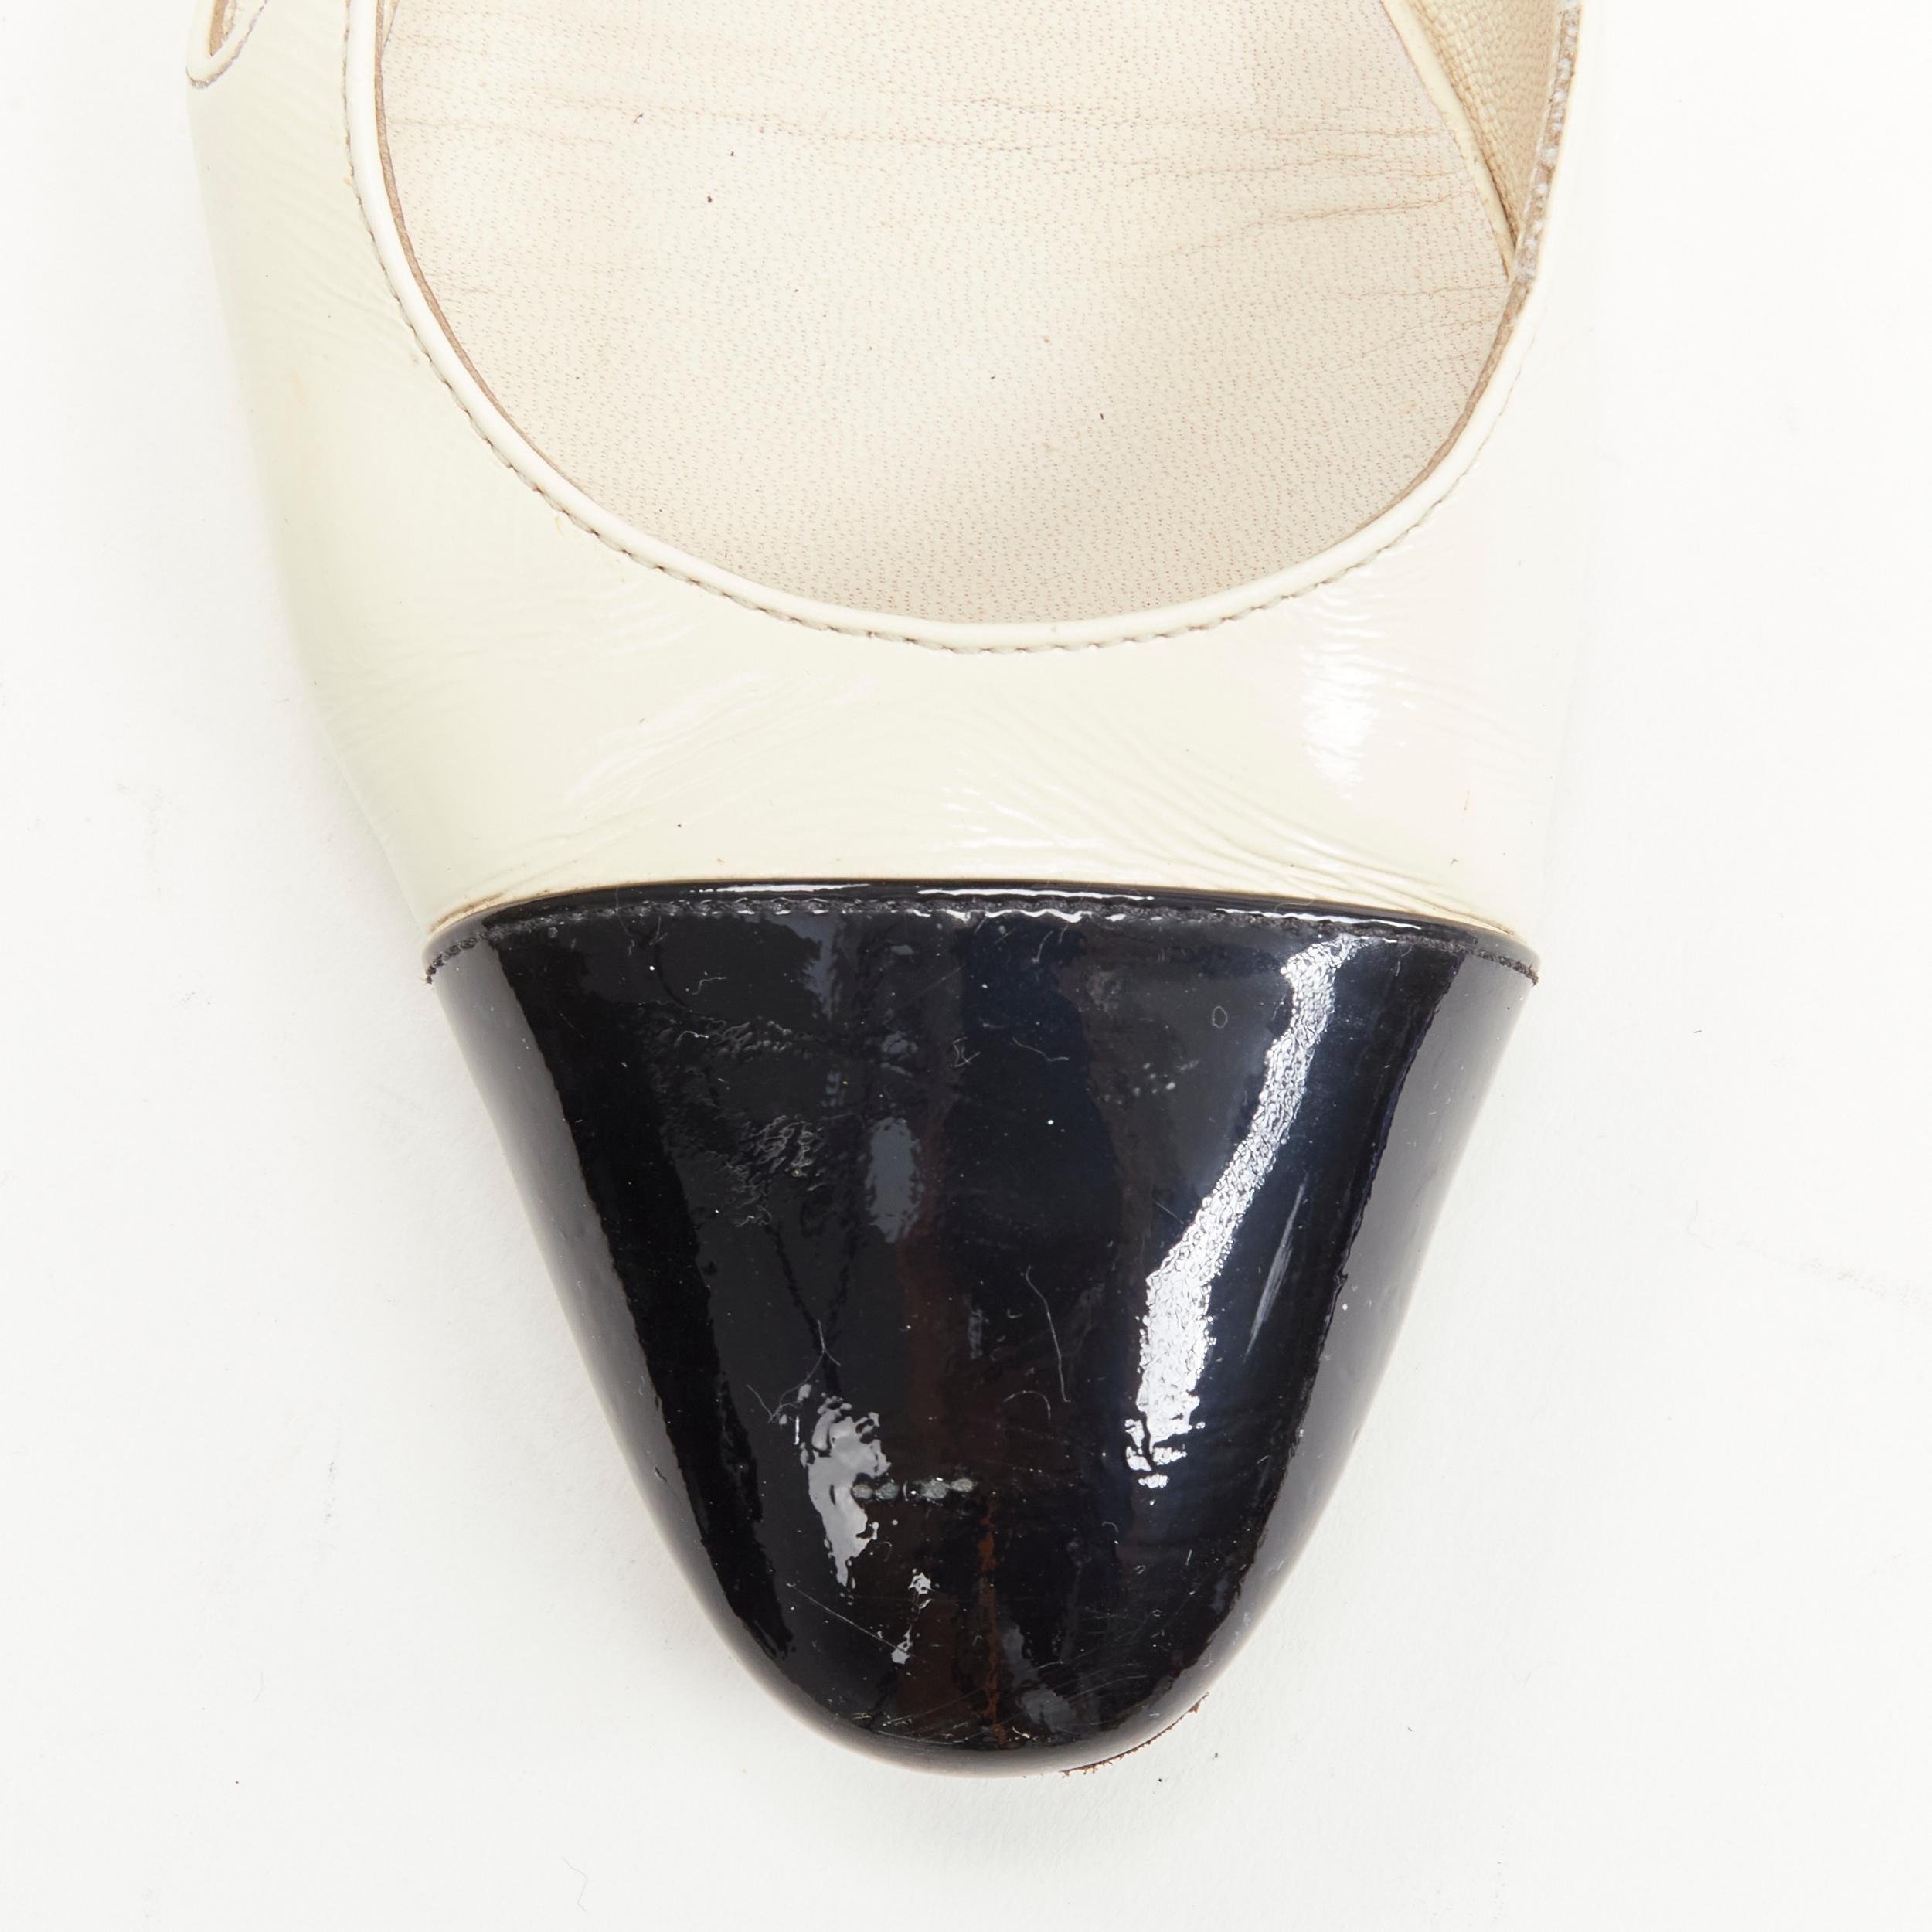 White CHANEL ivory black toe cap patent leather sling back CC heel flats EU36